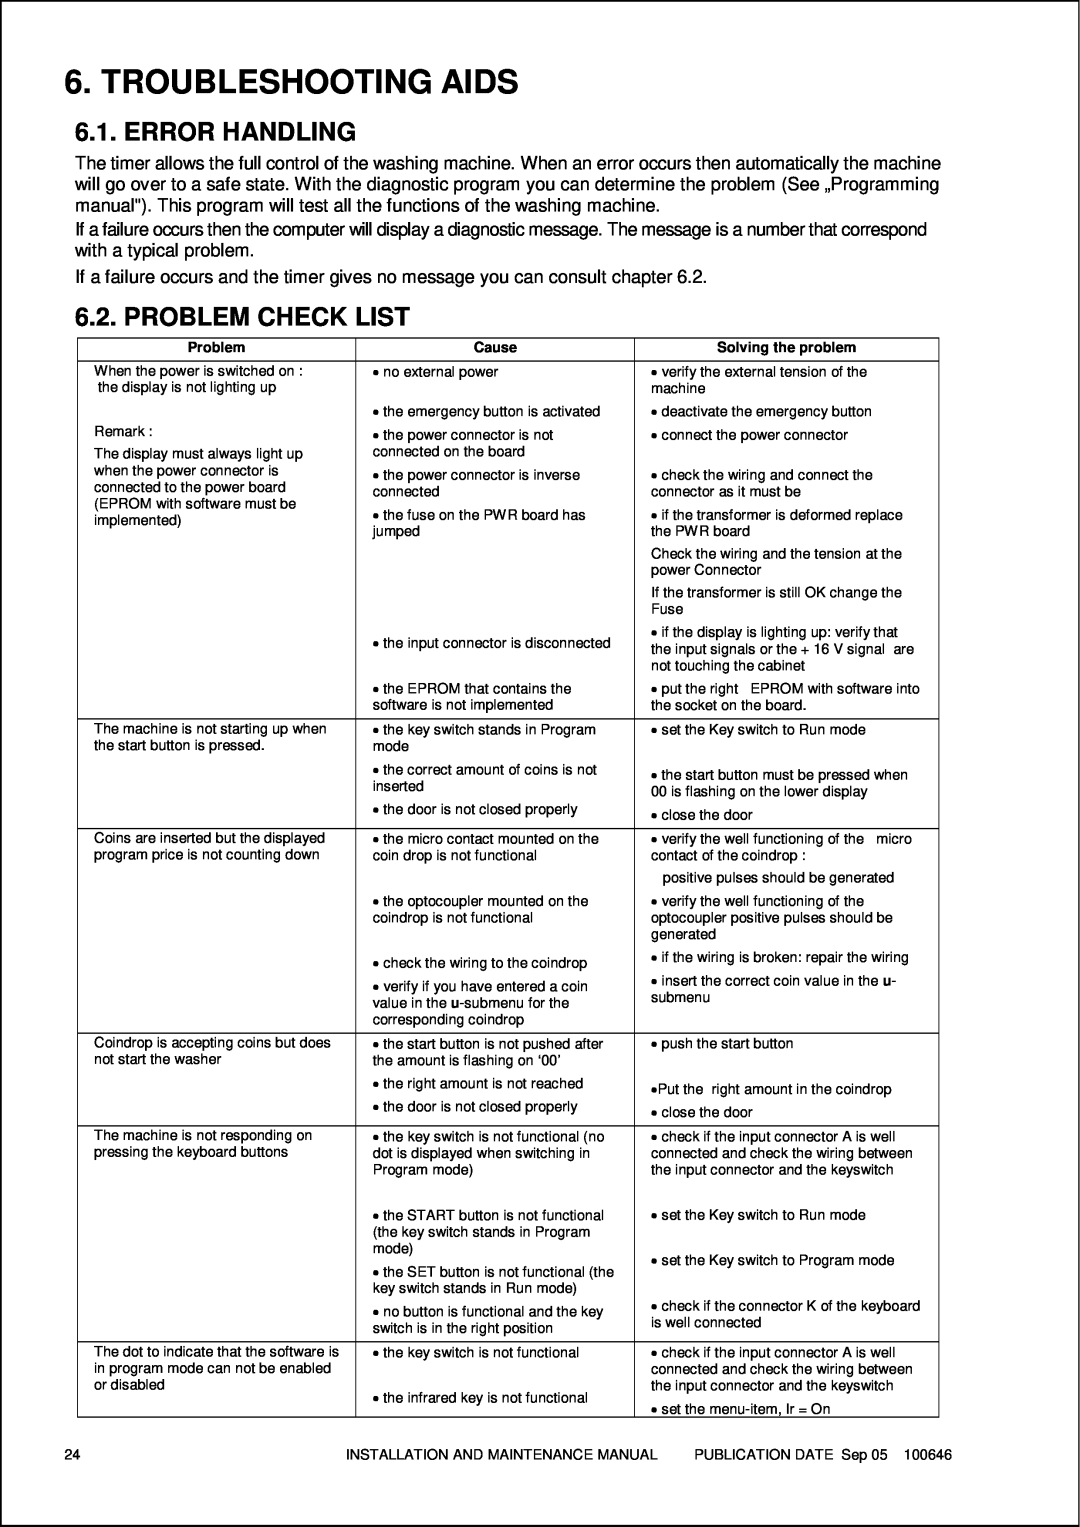 Maytag MFS 25-35 manual Troubleshooting Aids, Error Handling, Problem Check List 